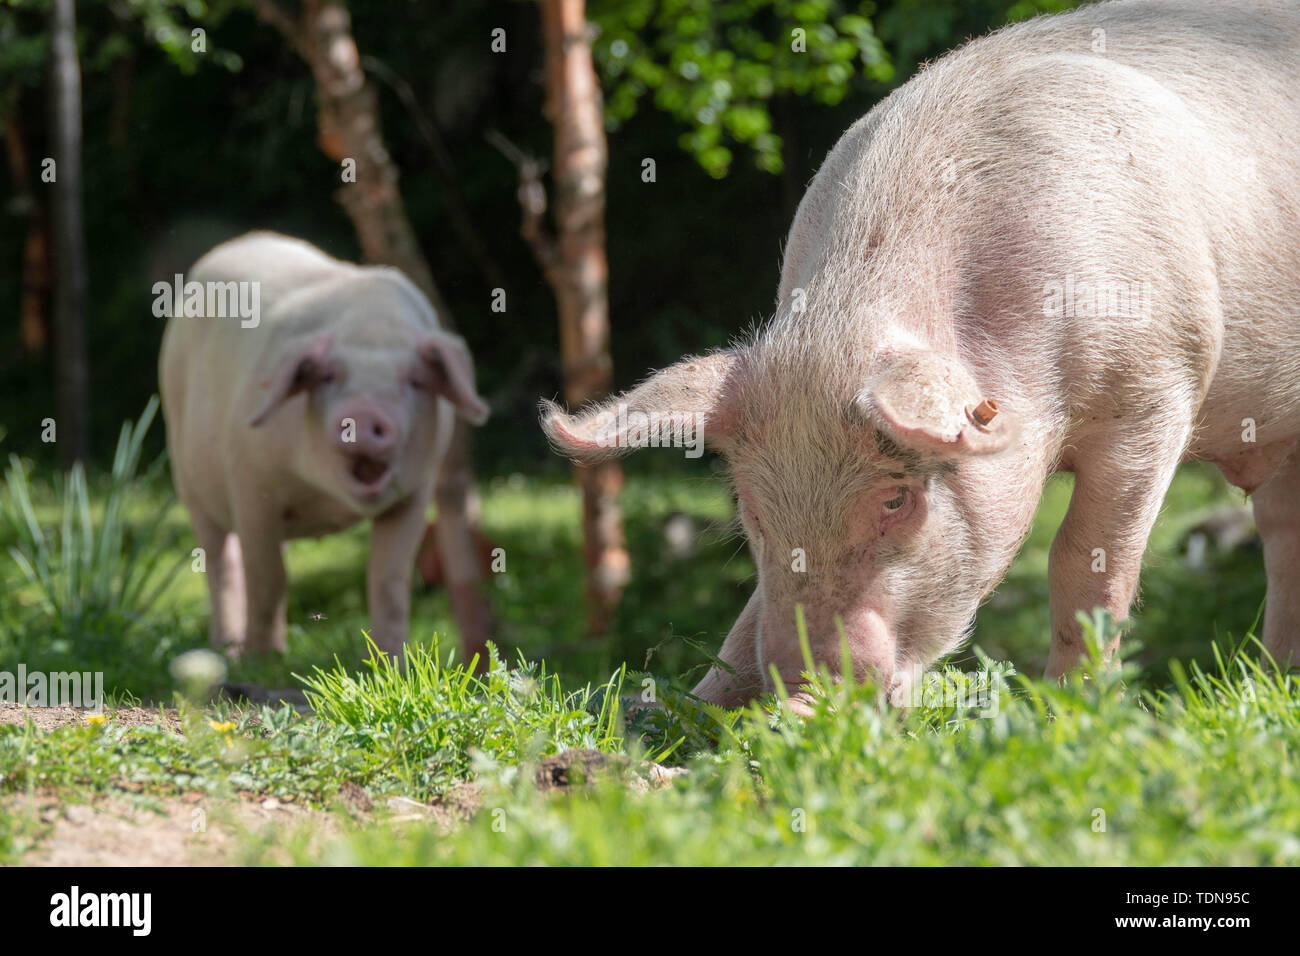 Pig. Stock Photo